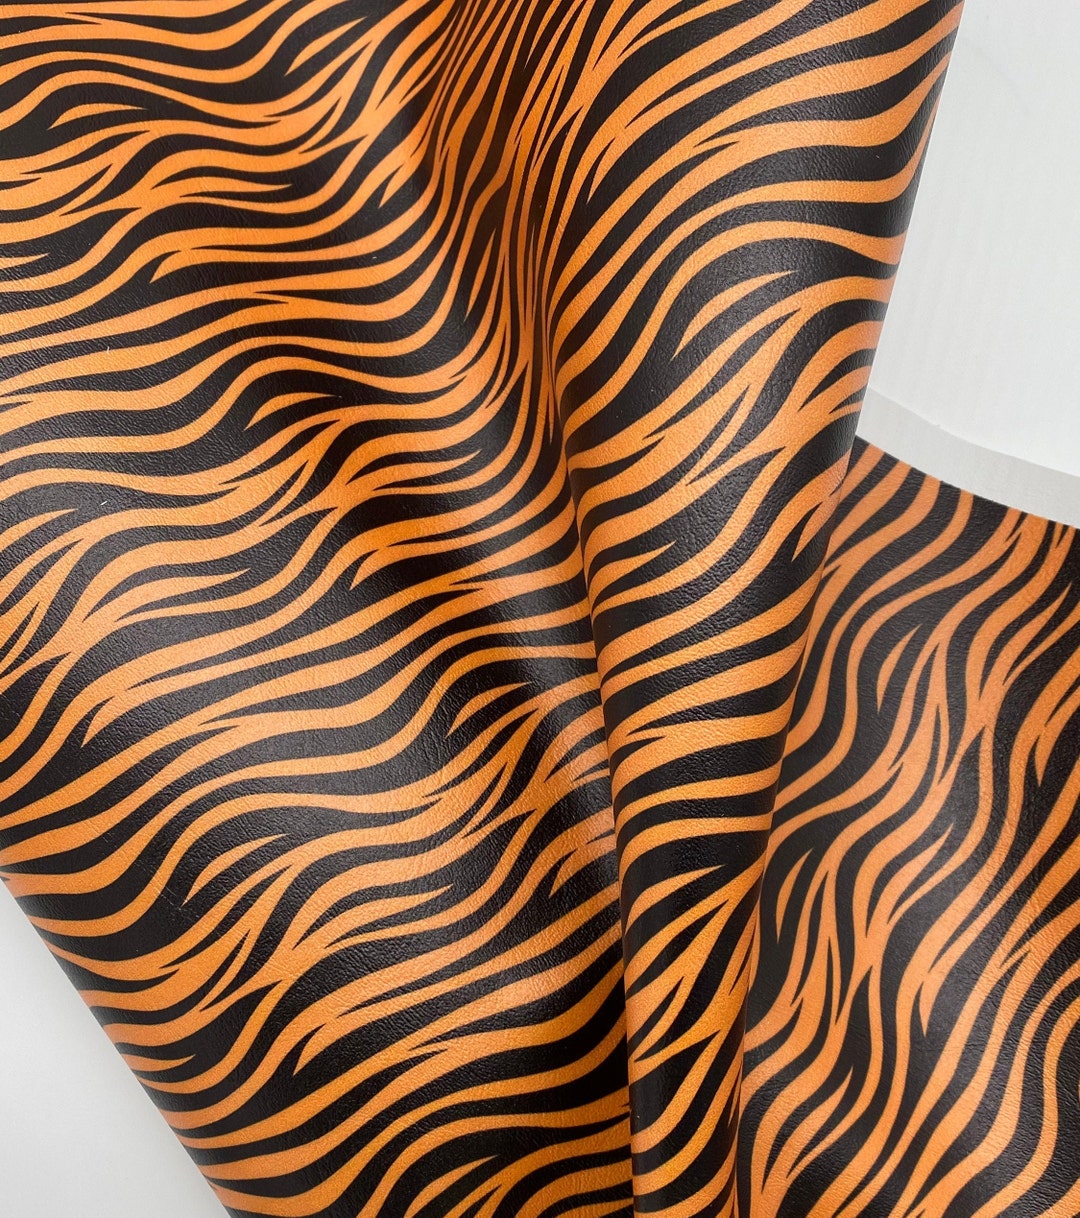 Marine Vinyl Yard Tiger Stripes Printed Faux Leather / photo